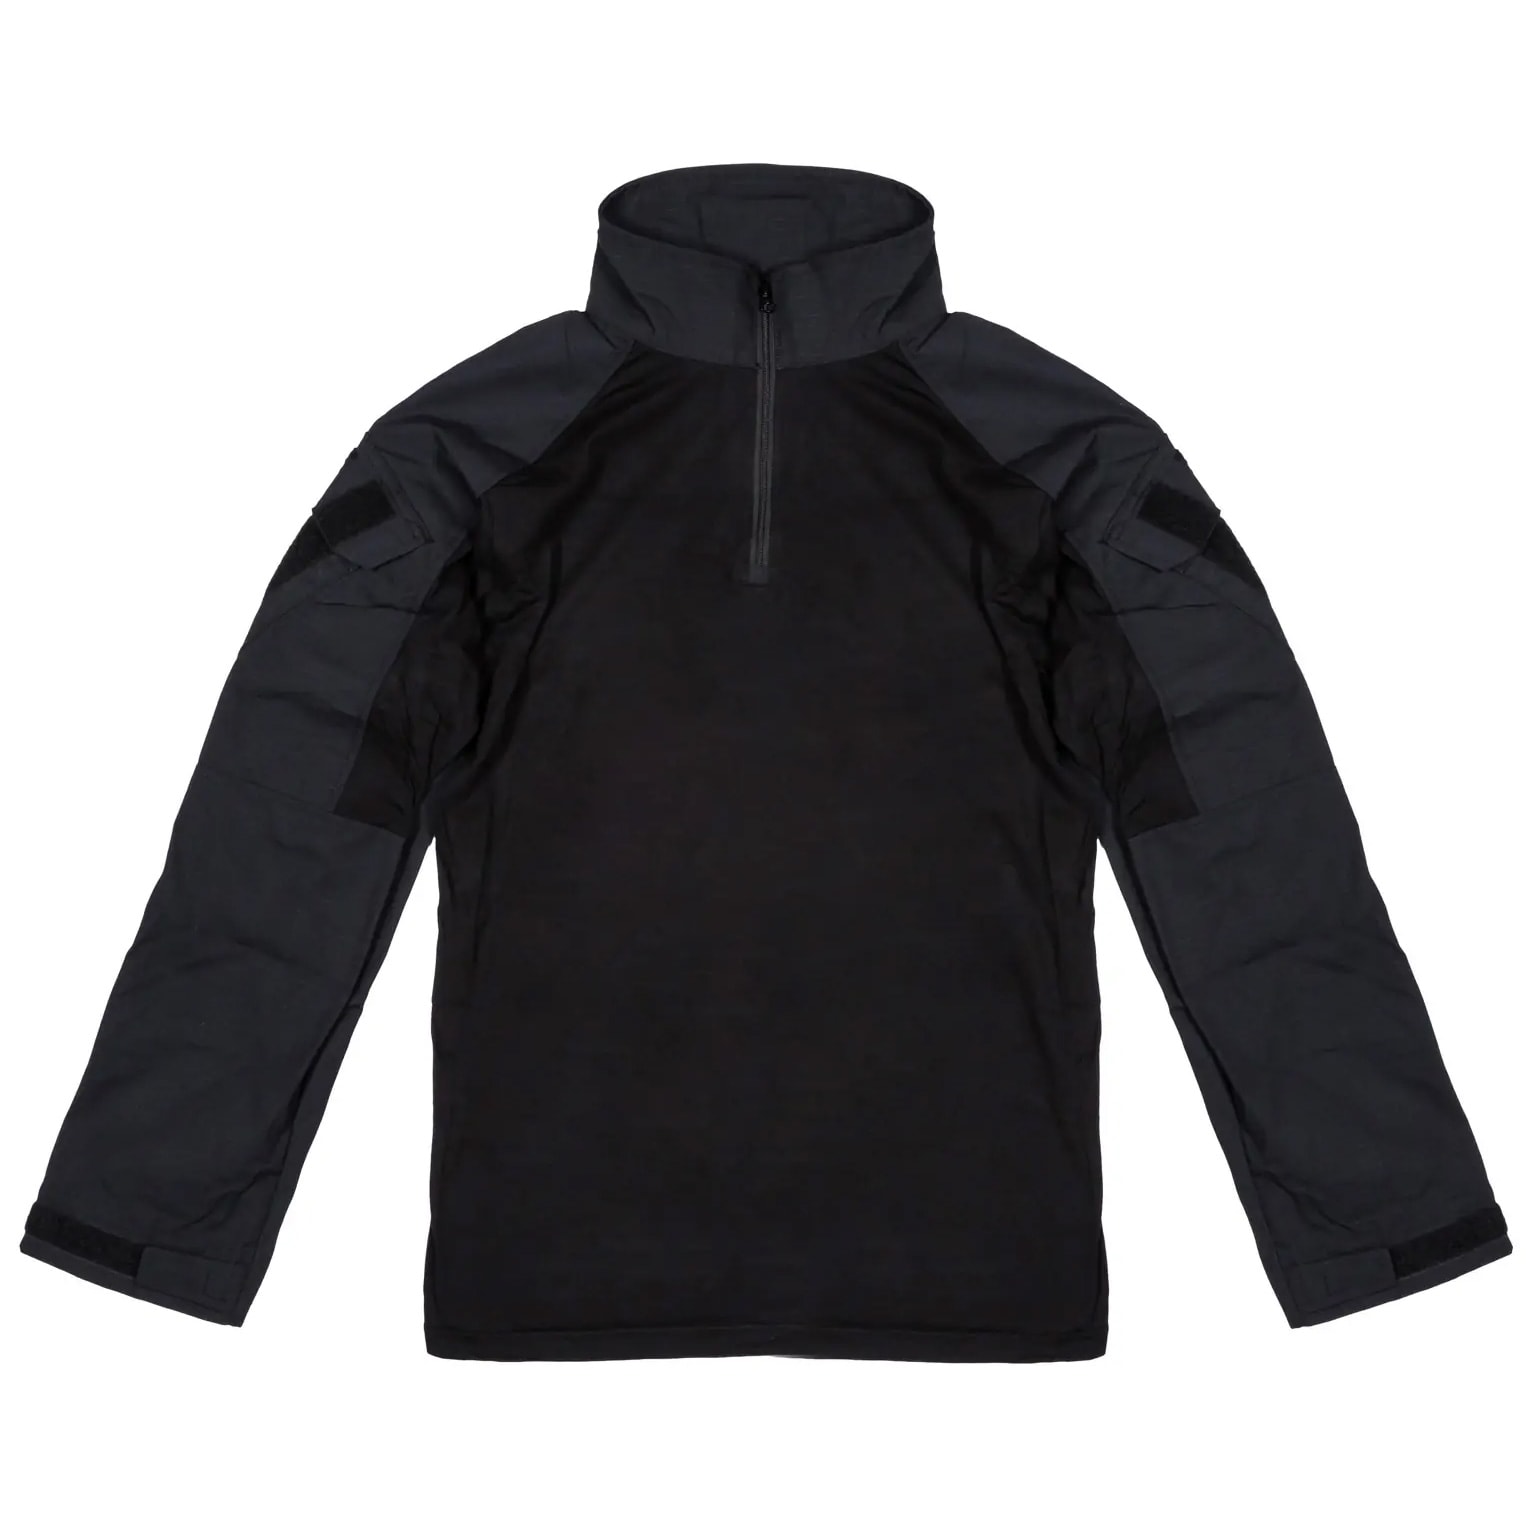 Bluza Primal Gear Combat Shirt G3 - Black